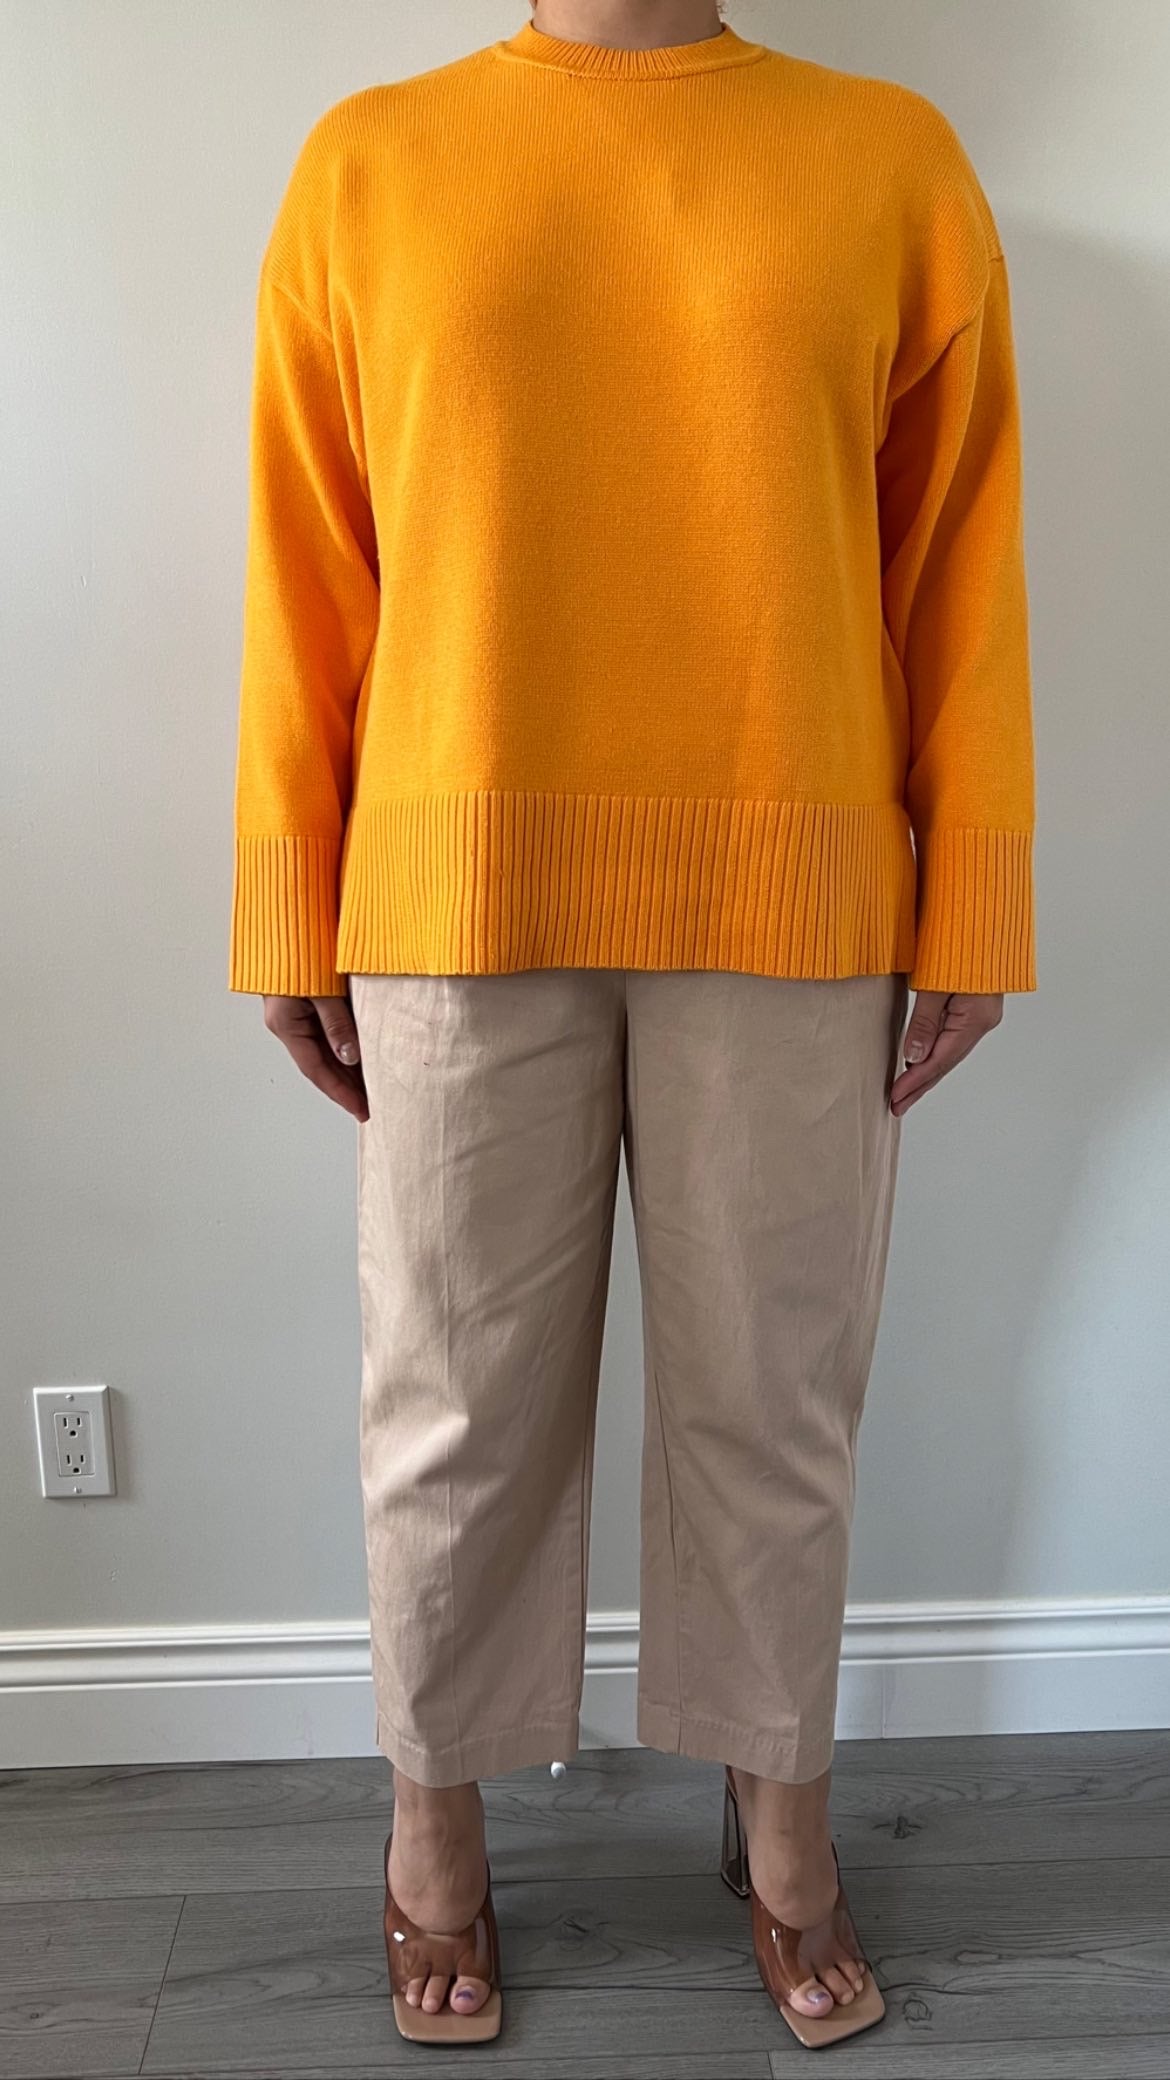 Zara Orange Sweater